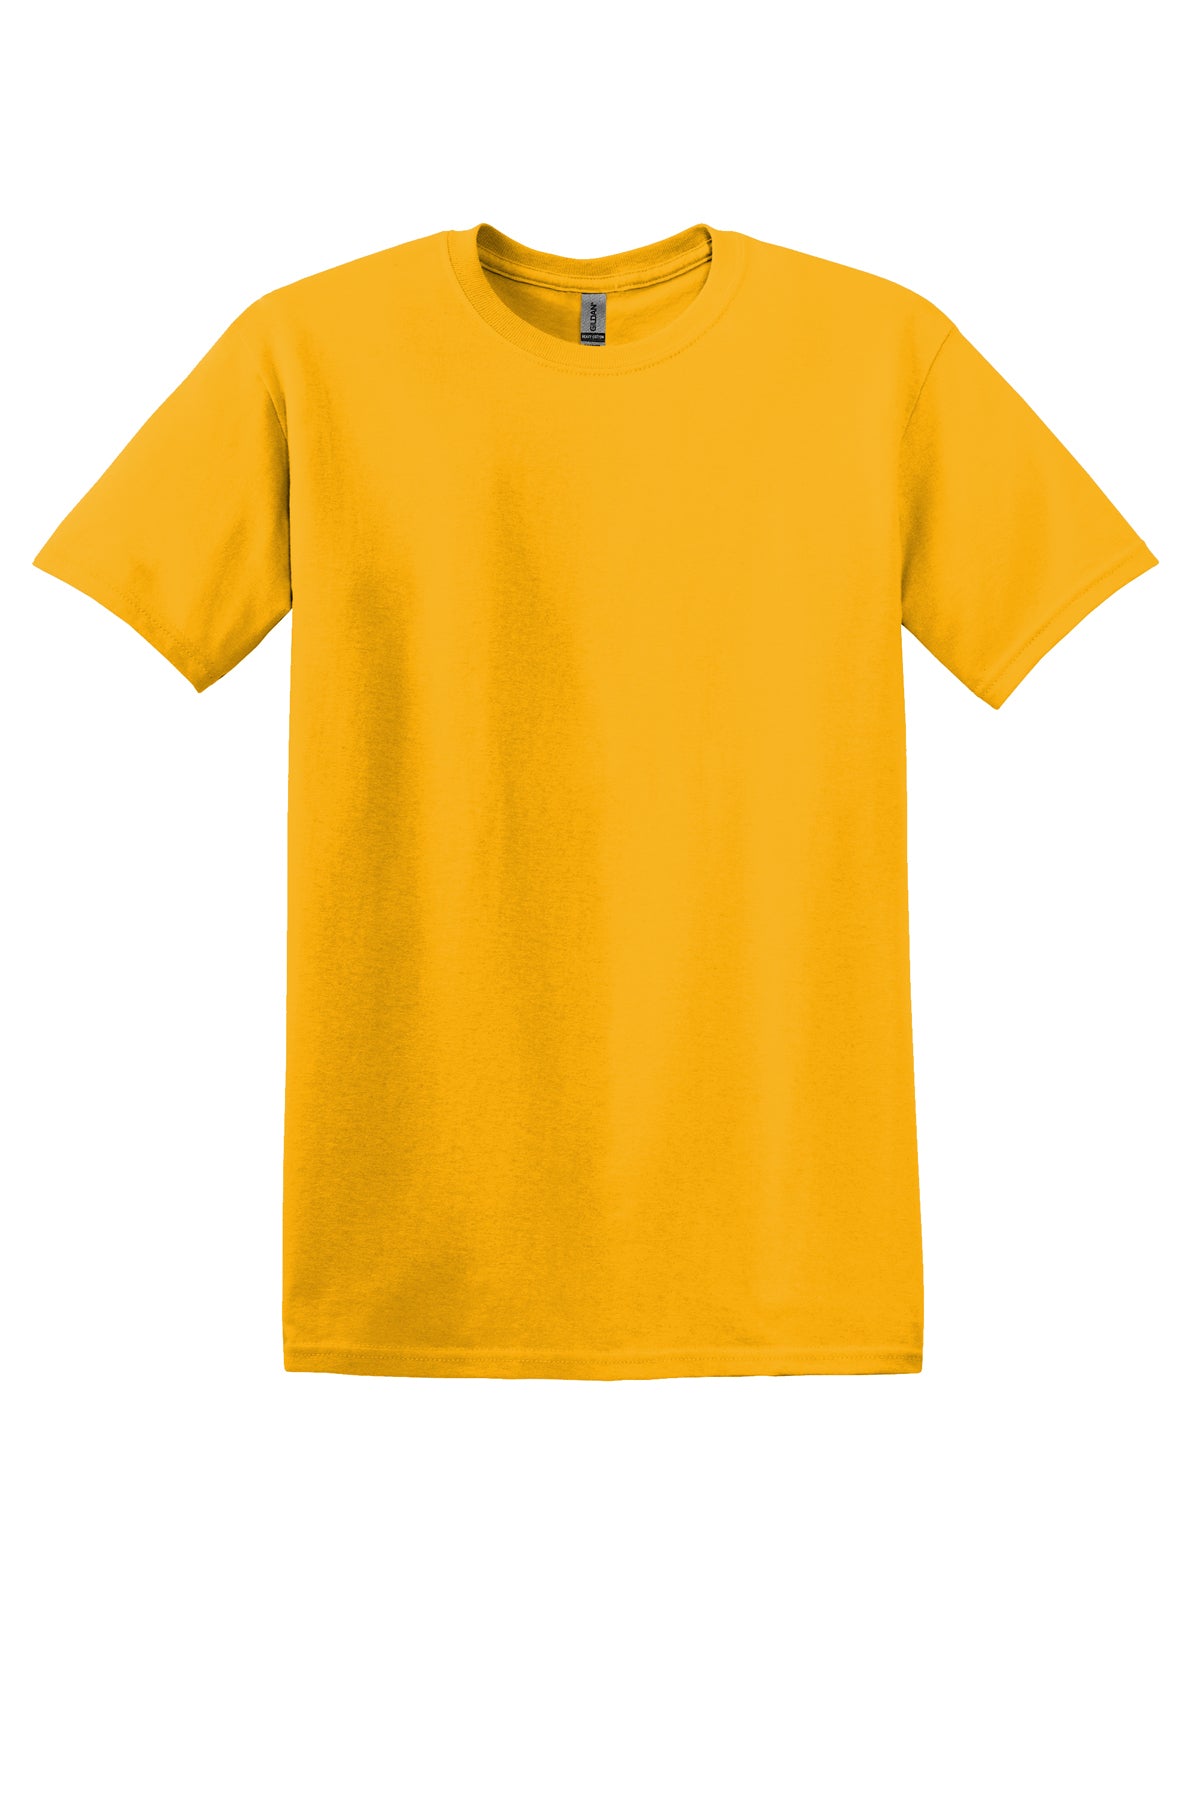 Gildan Mens/Unisex S/S Shirts Gold